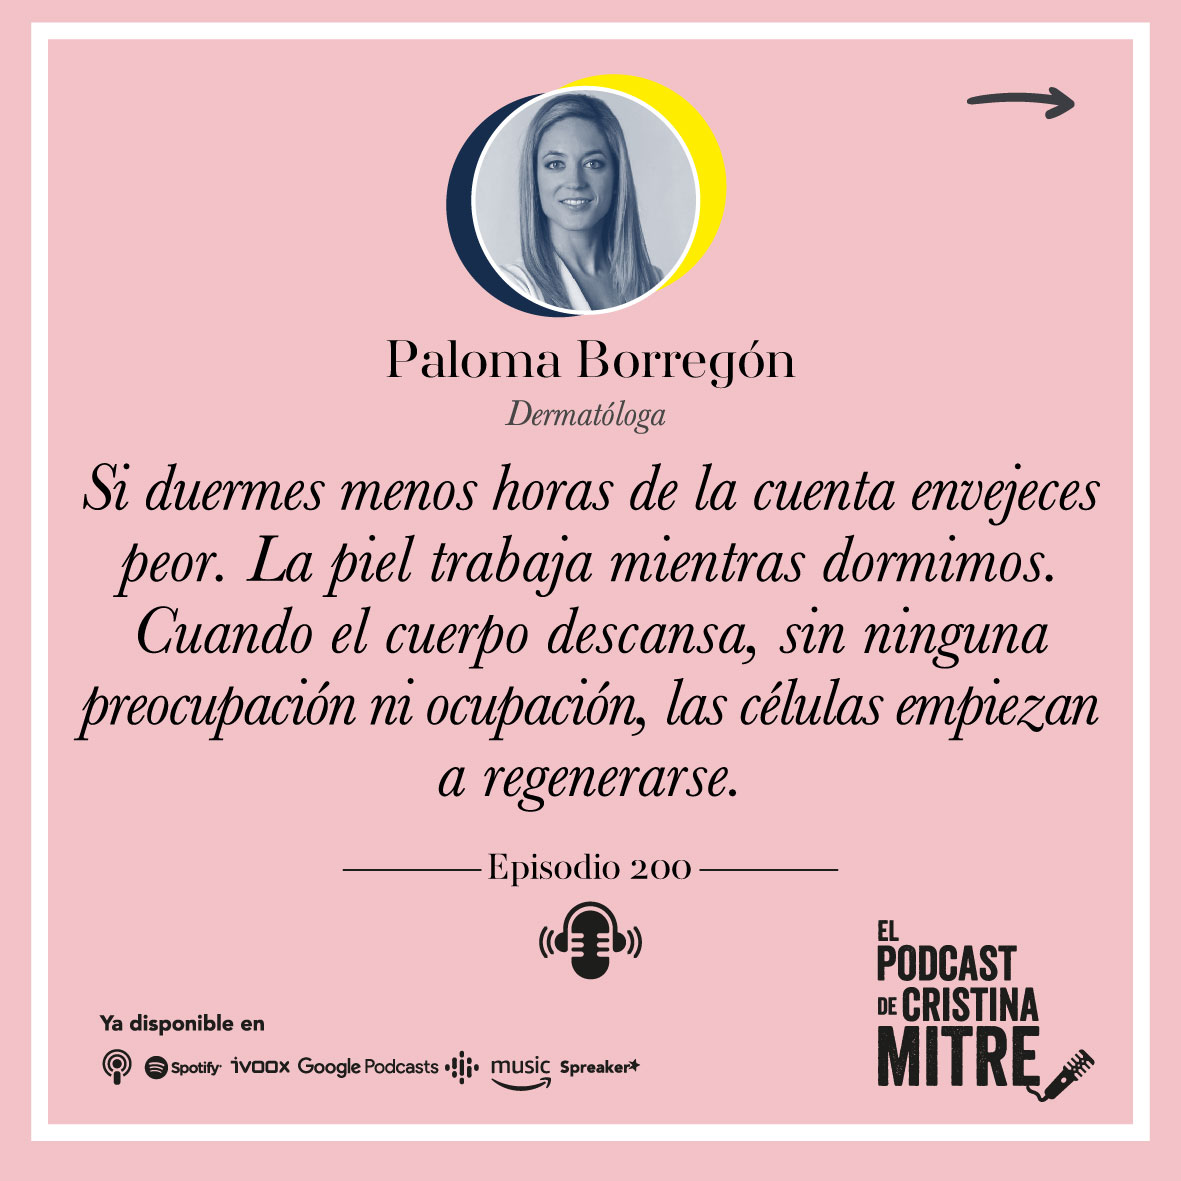 Podcast Cristina Mitre Paloma Borregon manchas piel